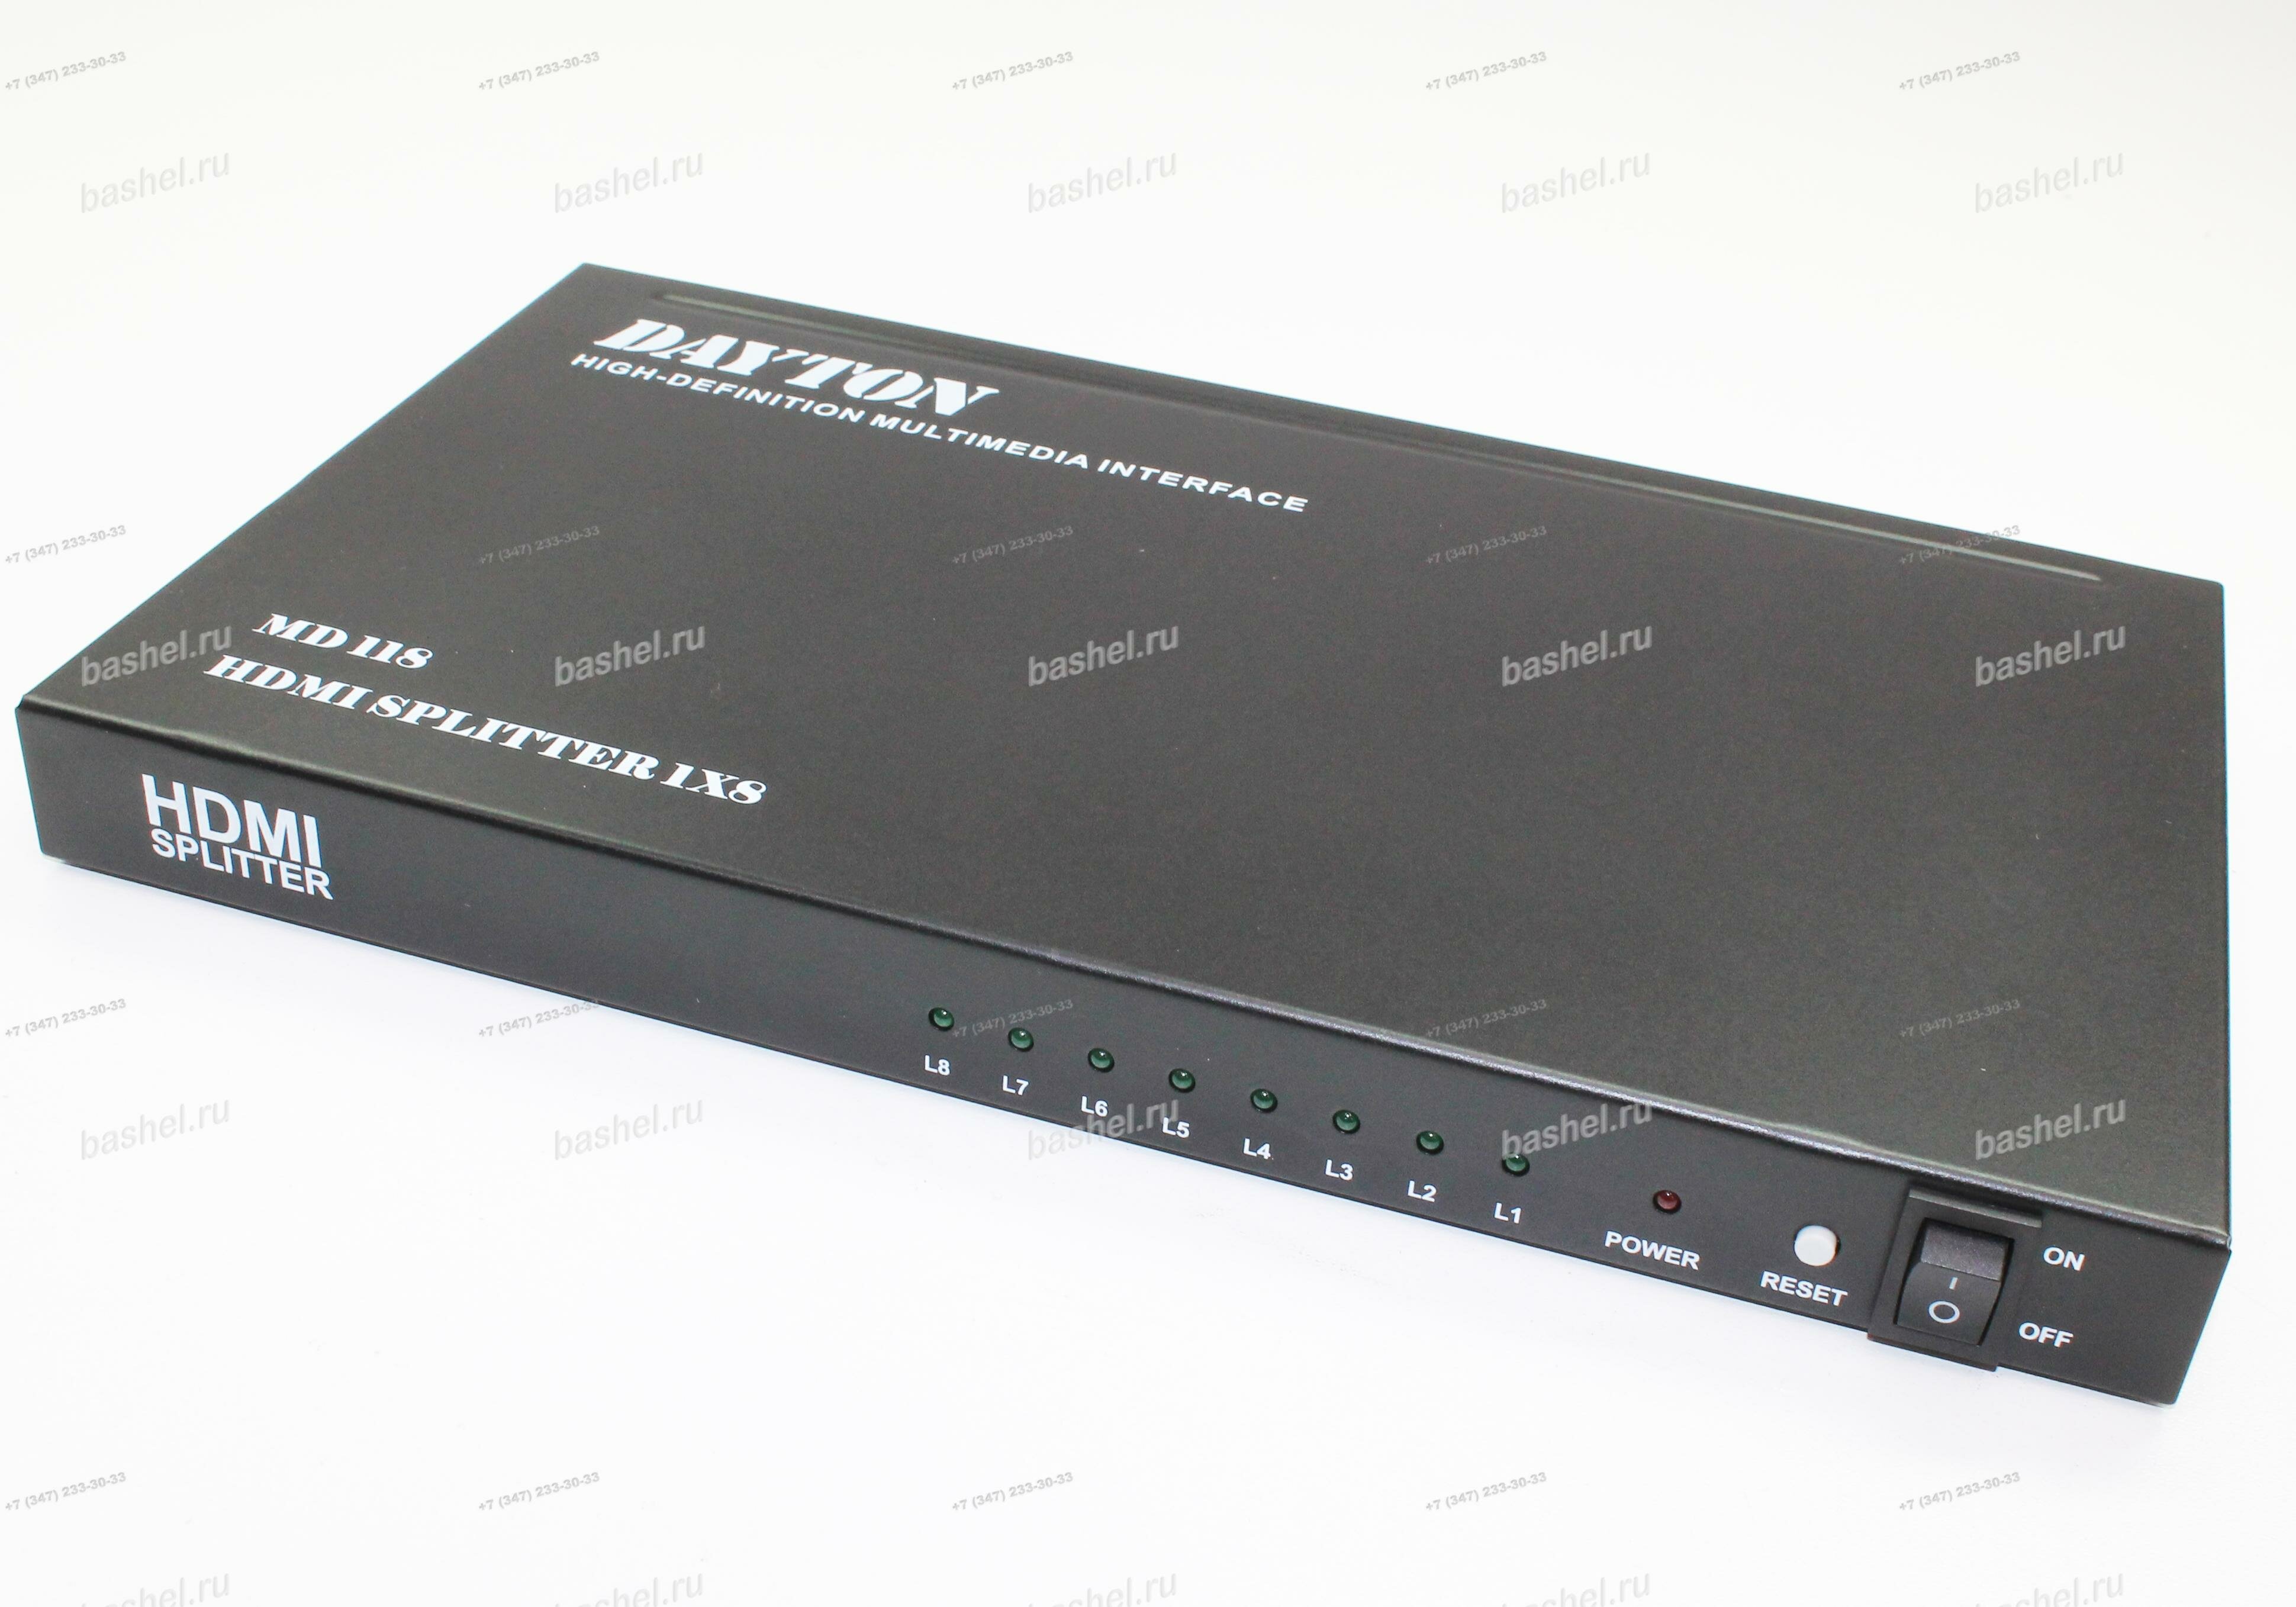 Разветвитель цифрового AV сигнала HDMI DAYTON MD-118NEW 1 вх.- 8 вых. с усилителем, DC 5V (HDMI 1.3 1080P, FULL HD, 3D) электротовар